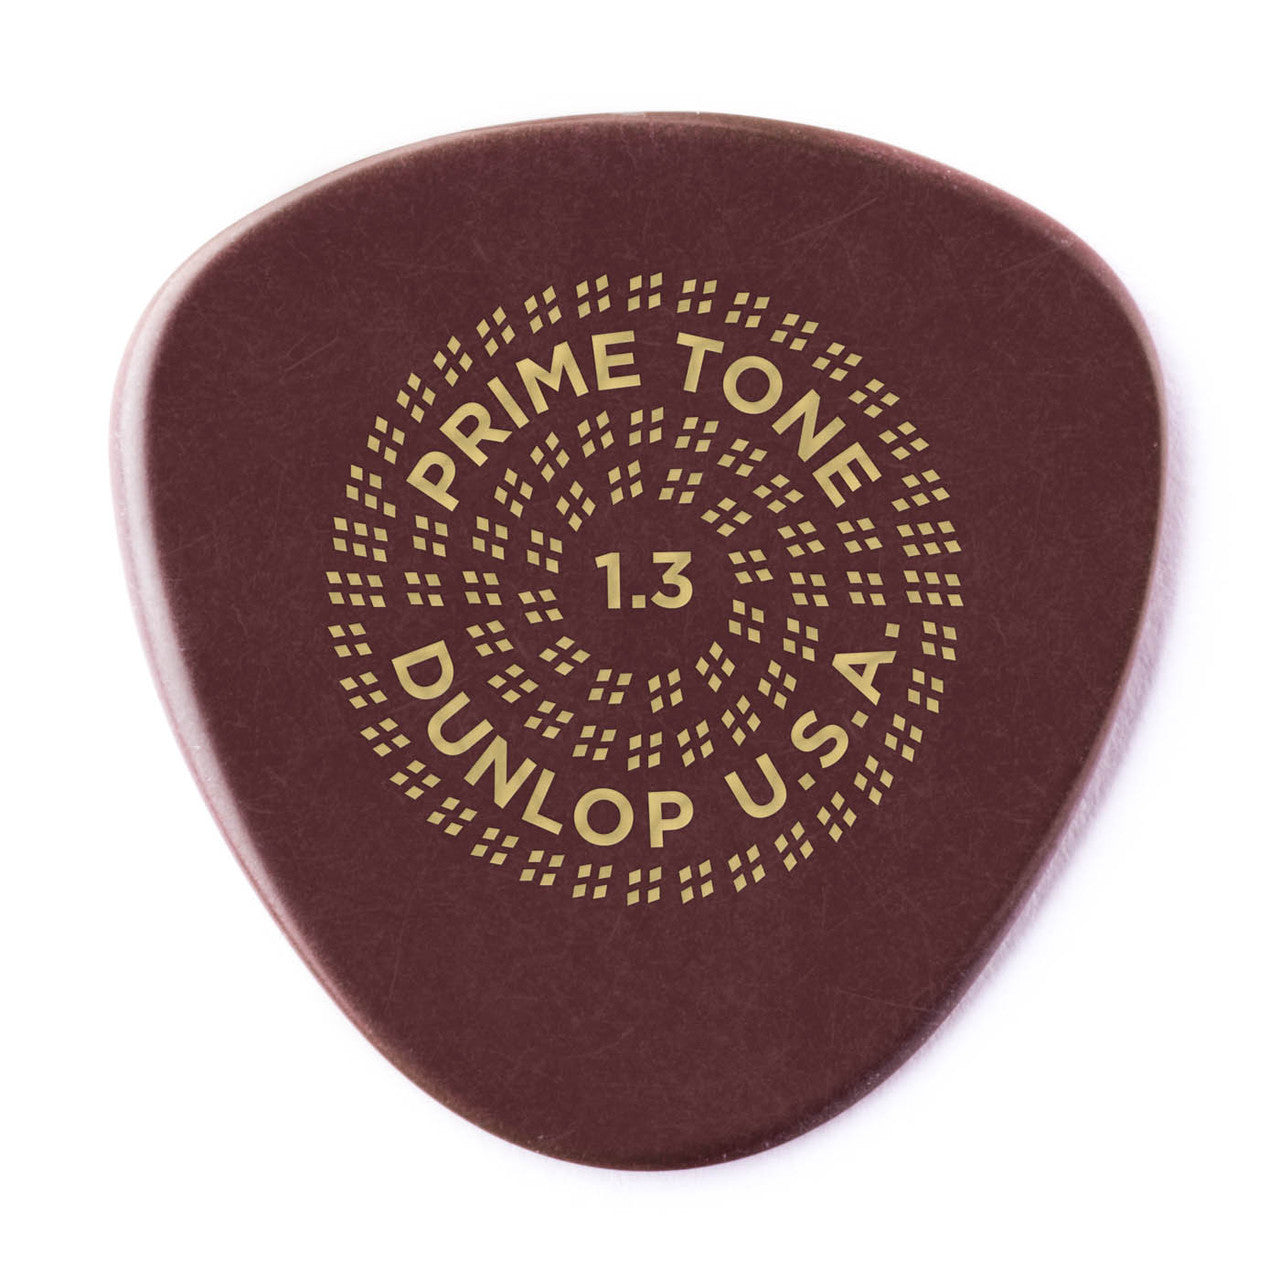 Dunlop Primetone® Semi Round Smooth Pick 1.3mm